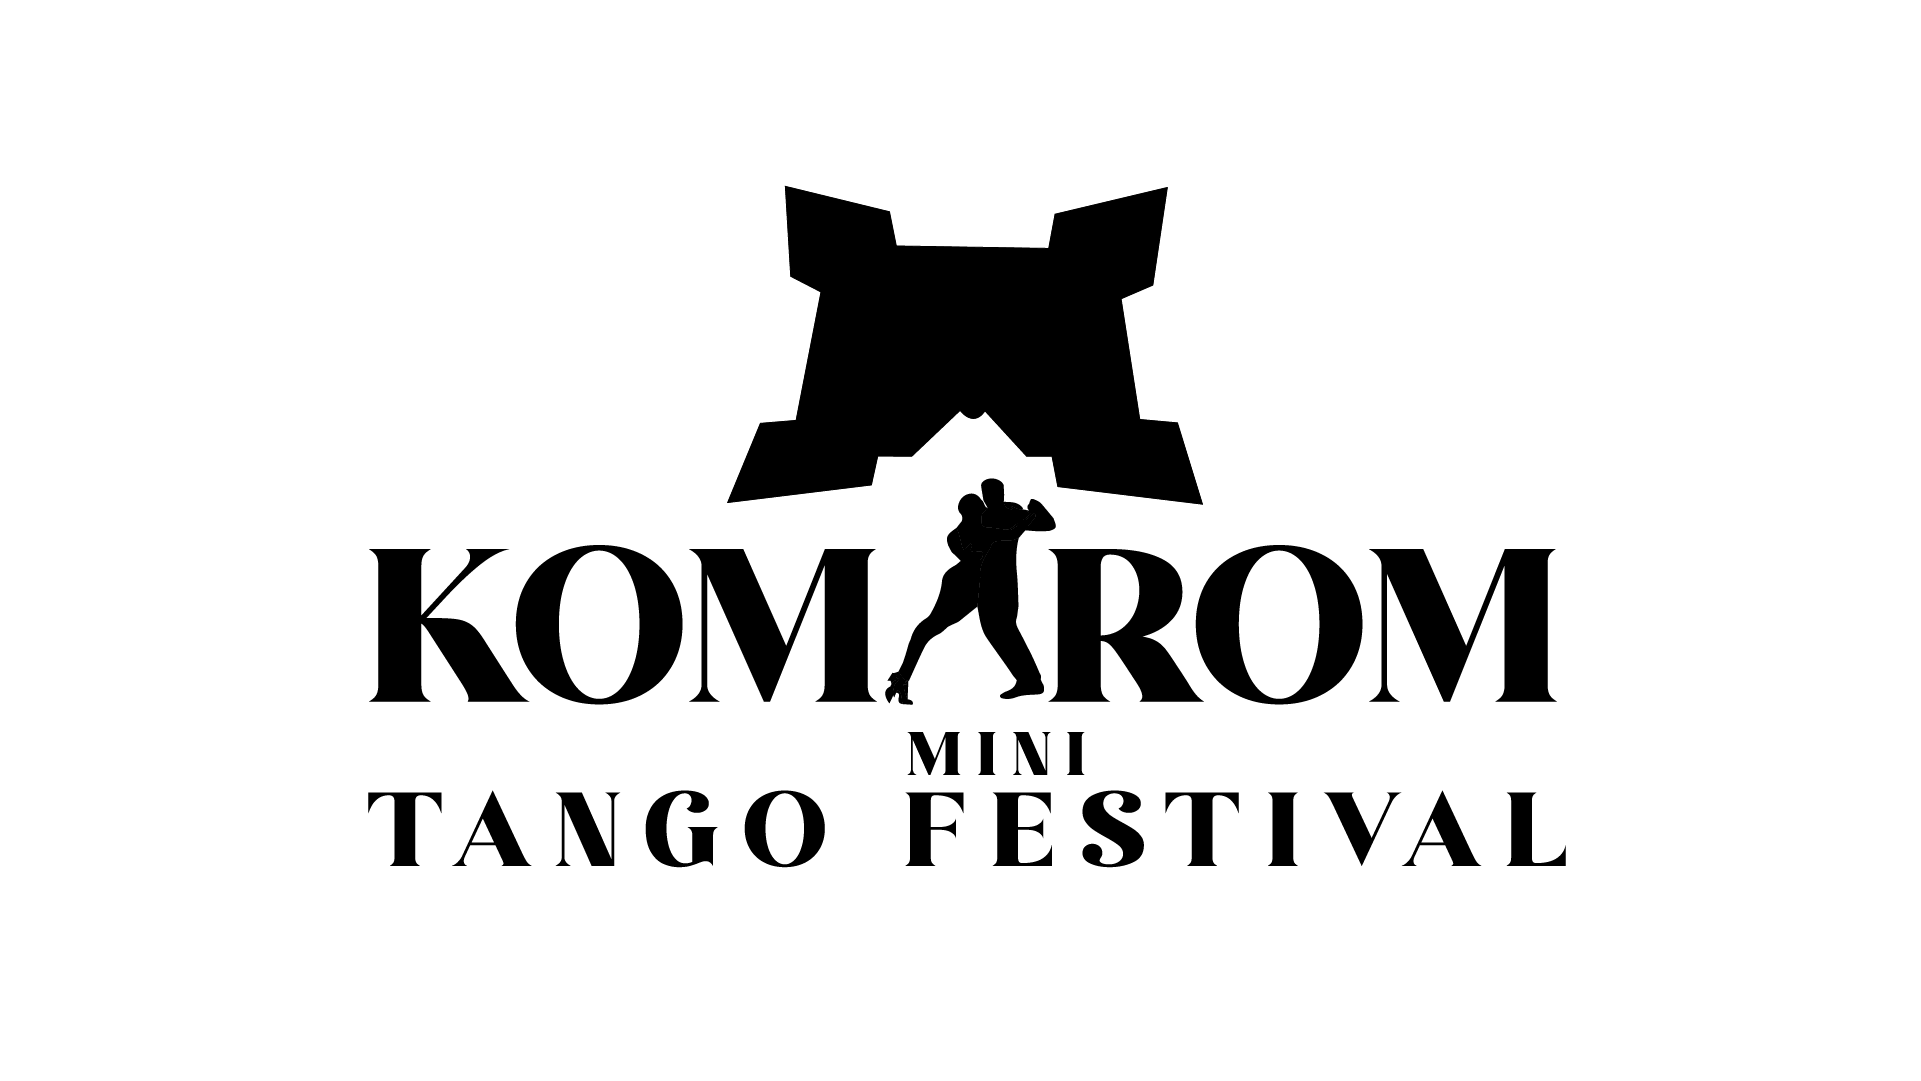 Komarom Tango Minifestival